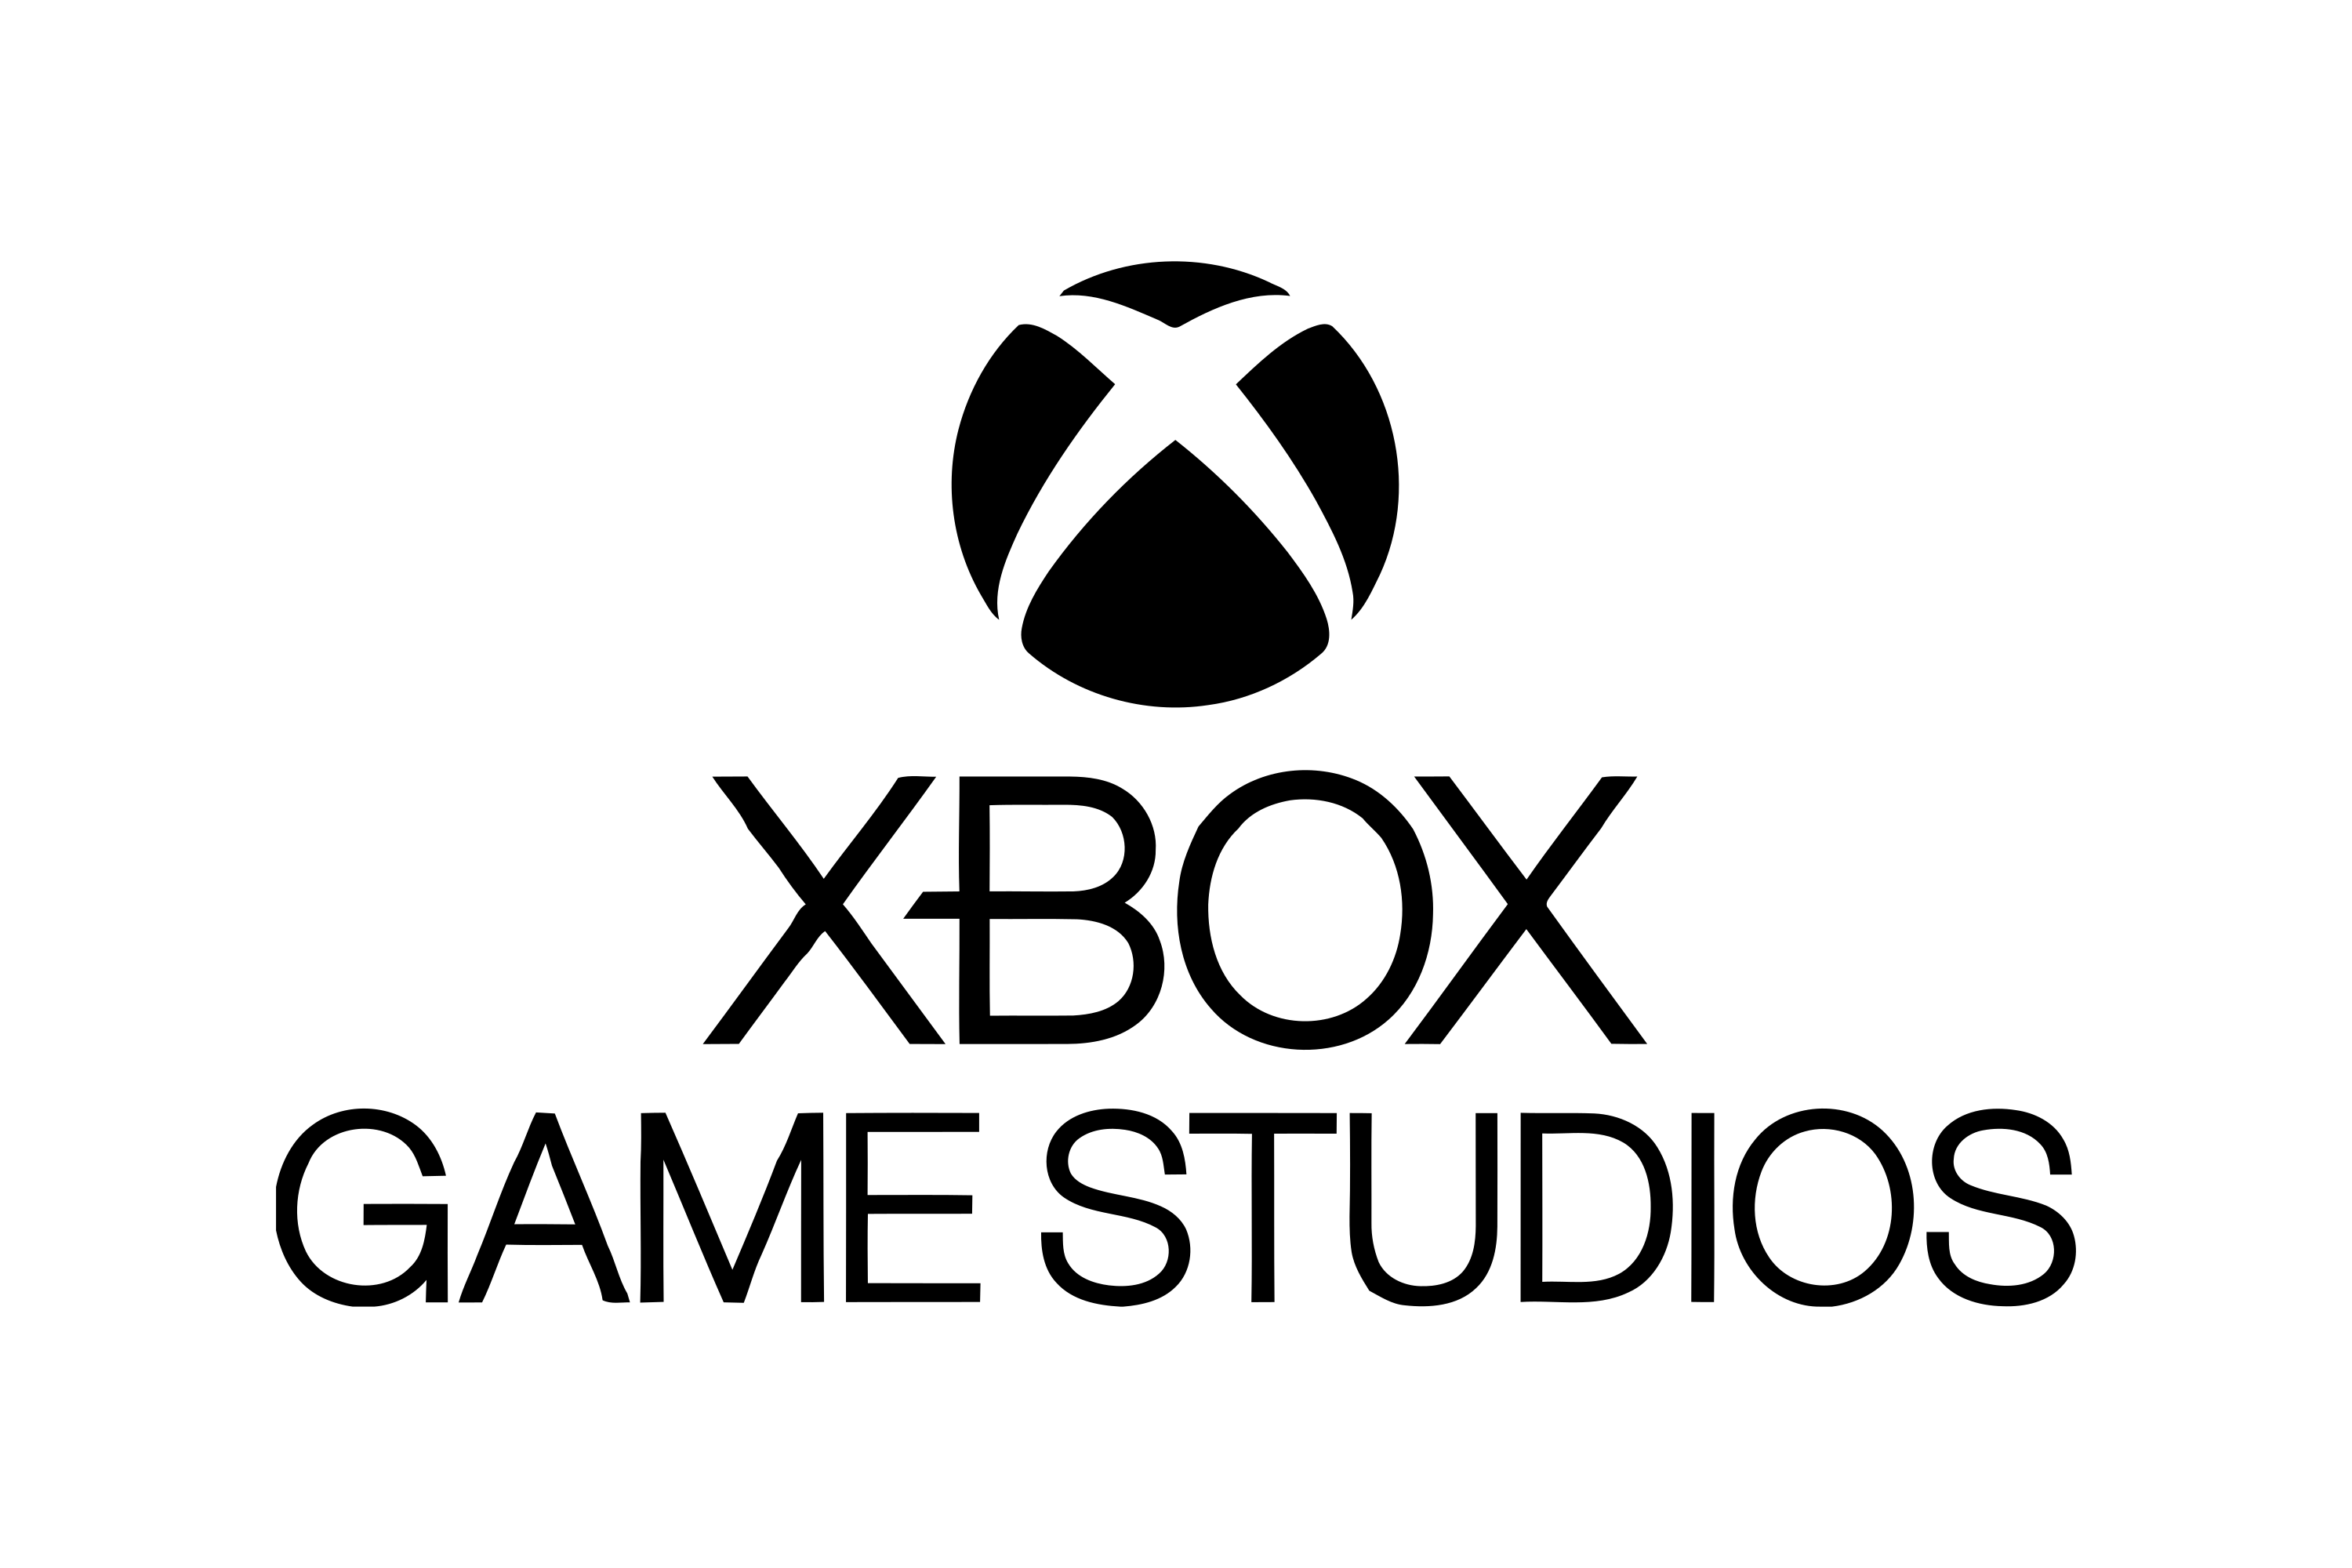 File:Microsoft Game Studios logo.png - Wikimedia Commons